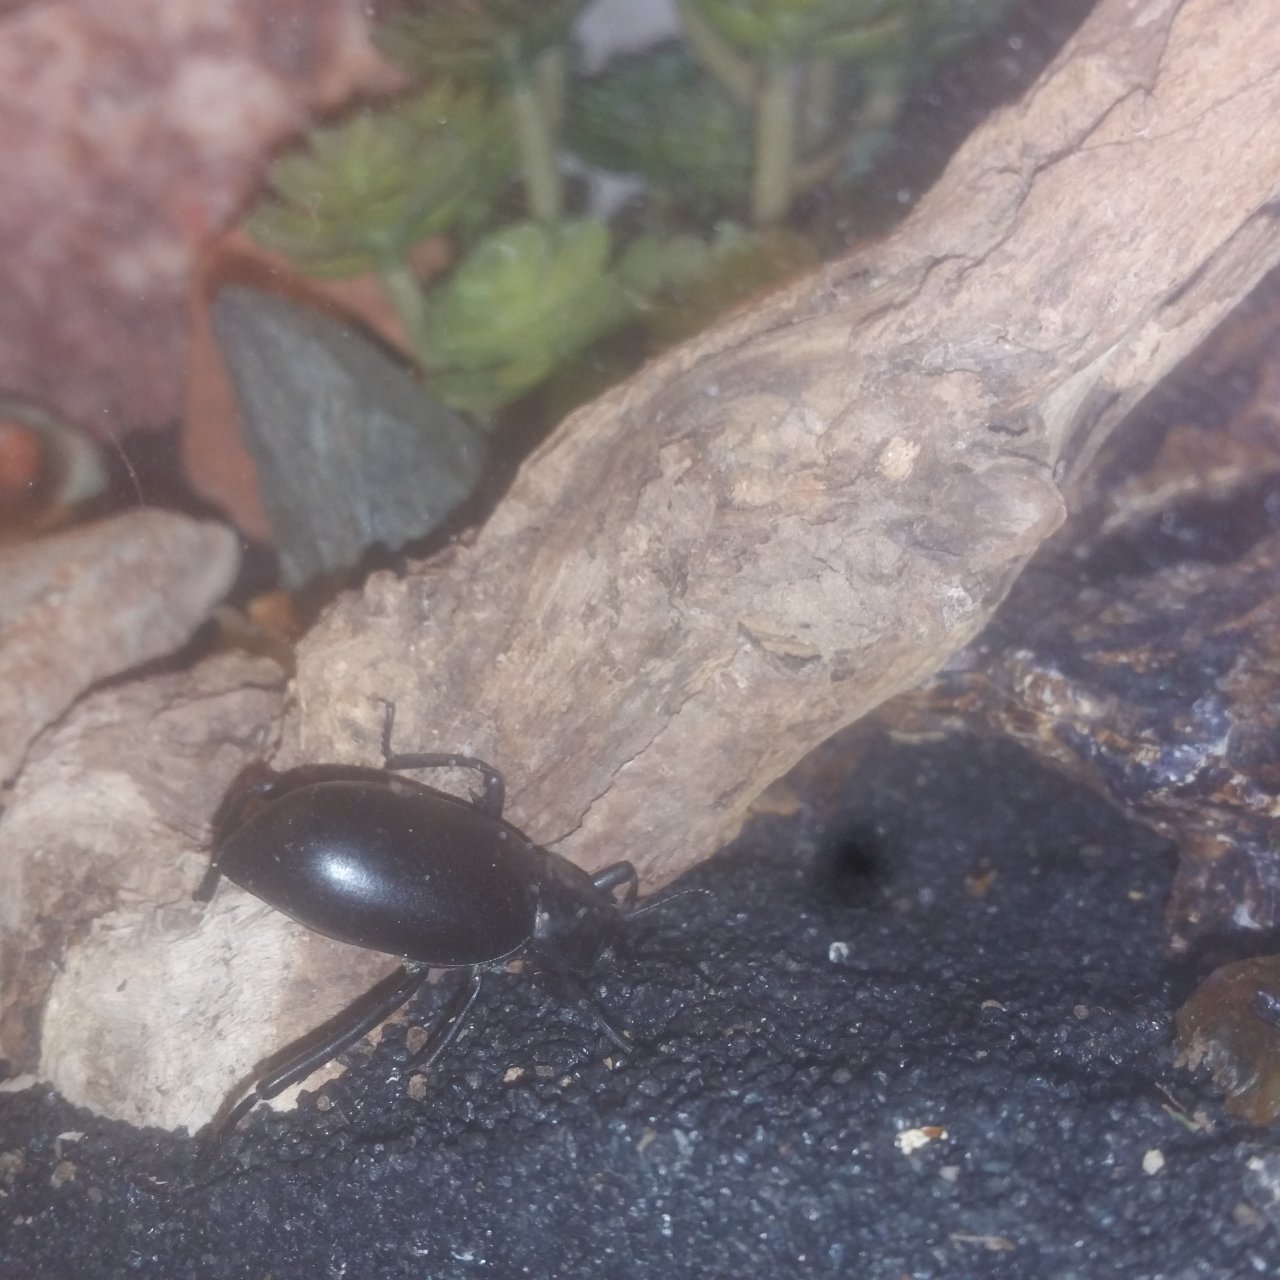 Pincate Beetle Cohabitating with Scorpions